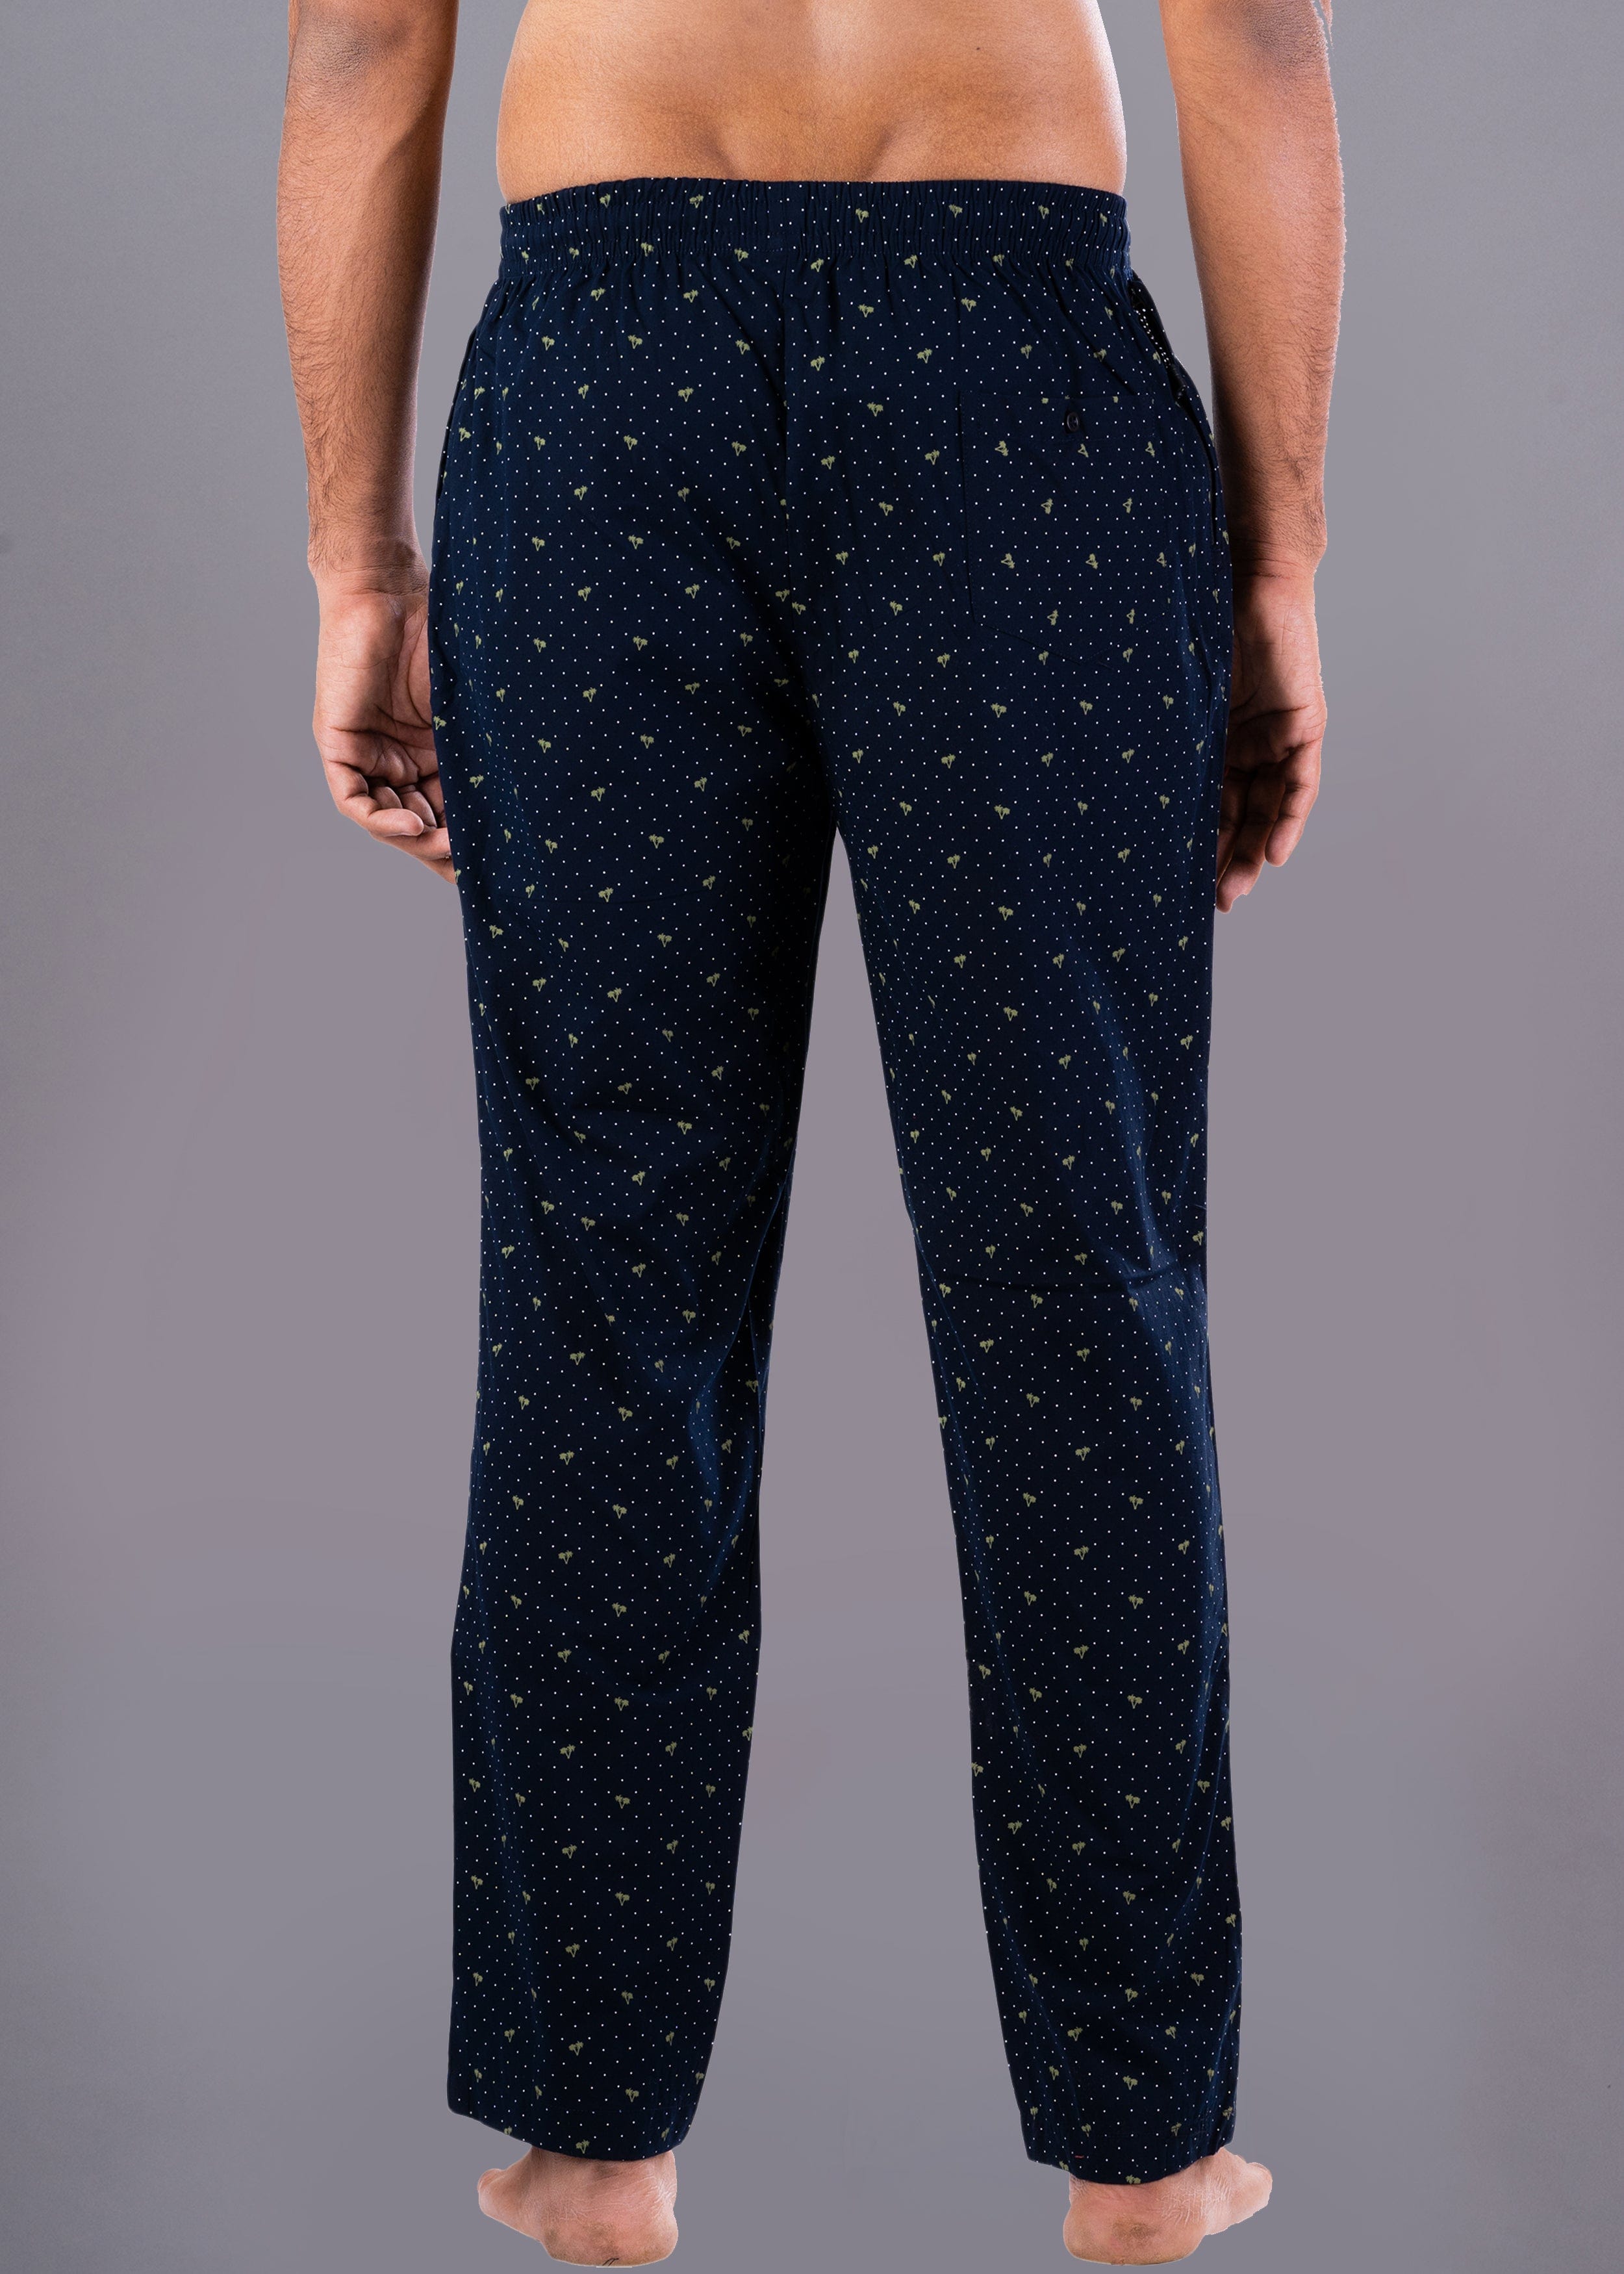 Golden Dot Printed navy blue Cotton Pyjama For Men